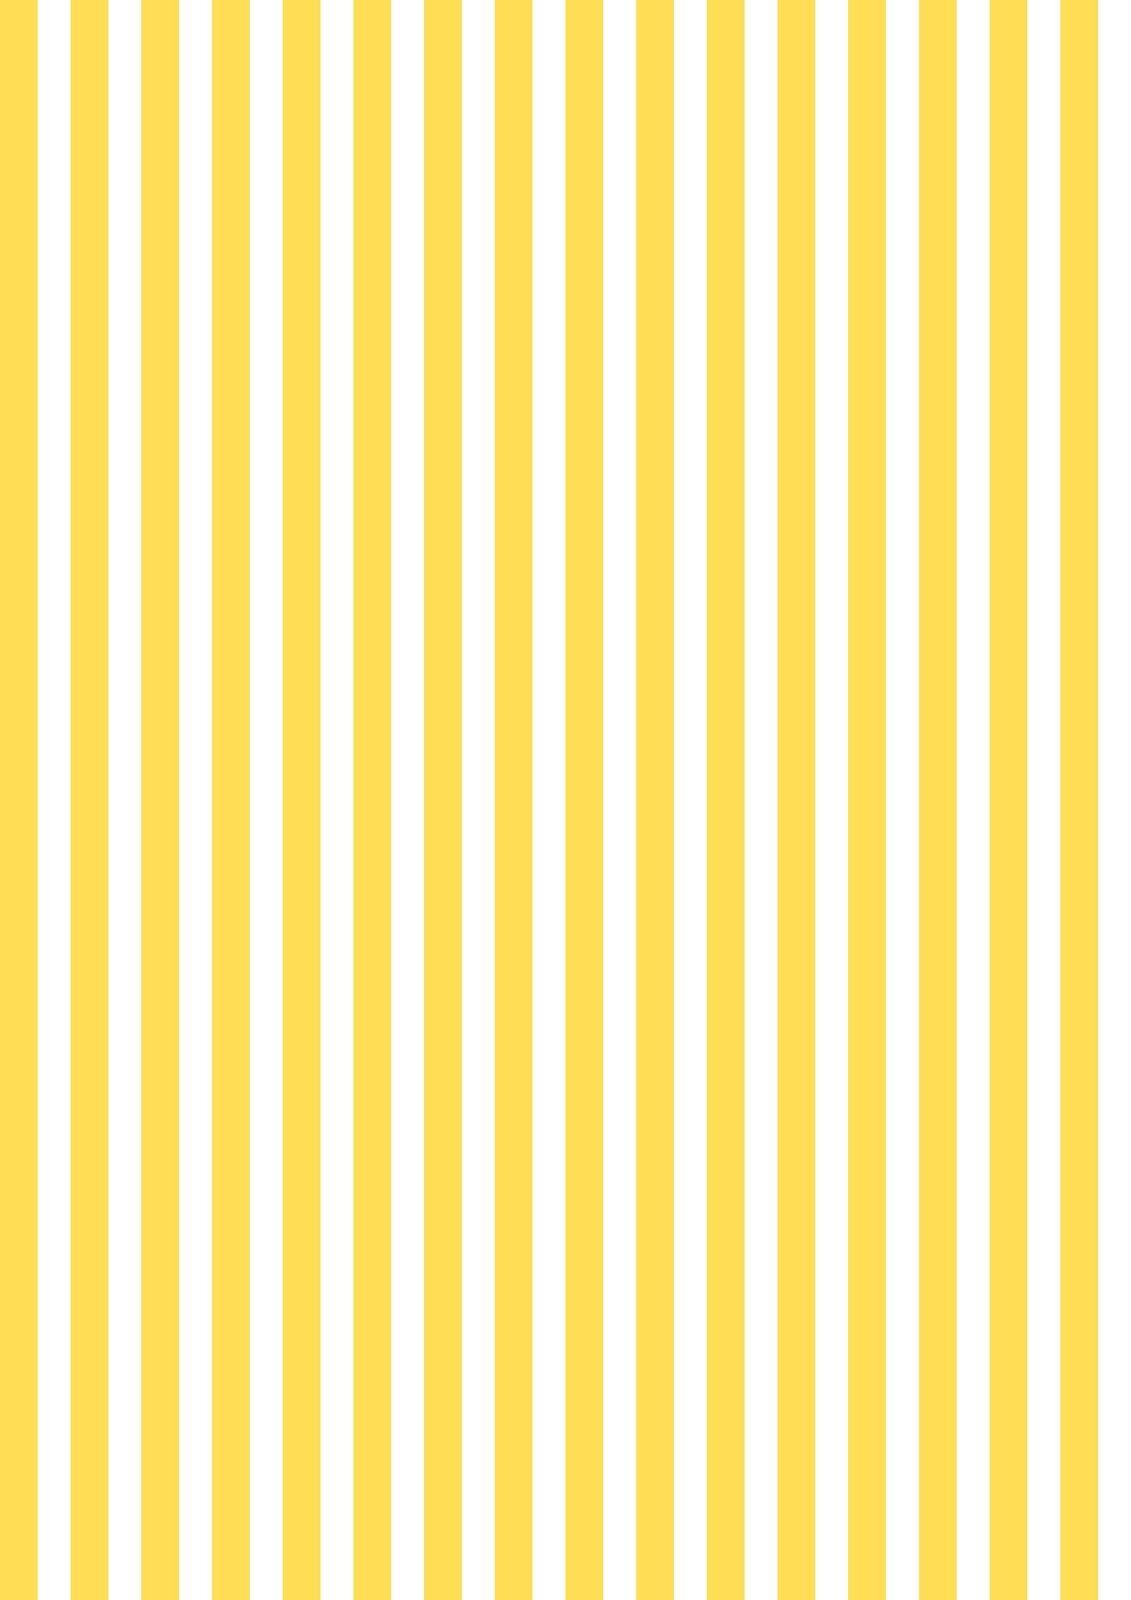 White with Yellow Stripe Logo - Free digital striped scrapbooking paper - ausdruckbares ...